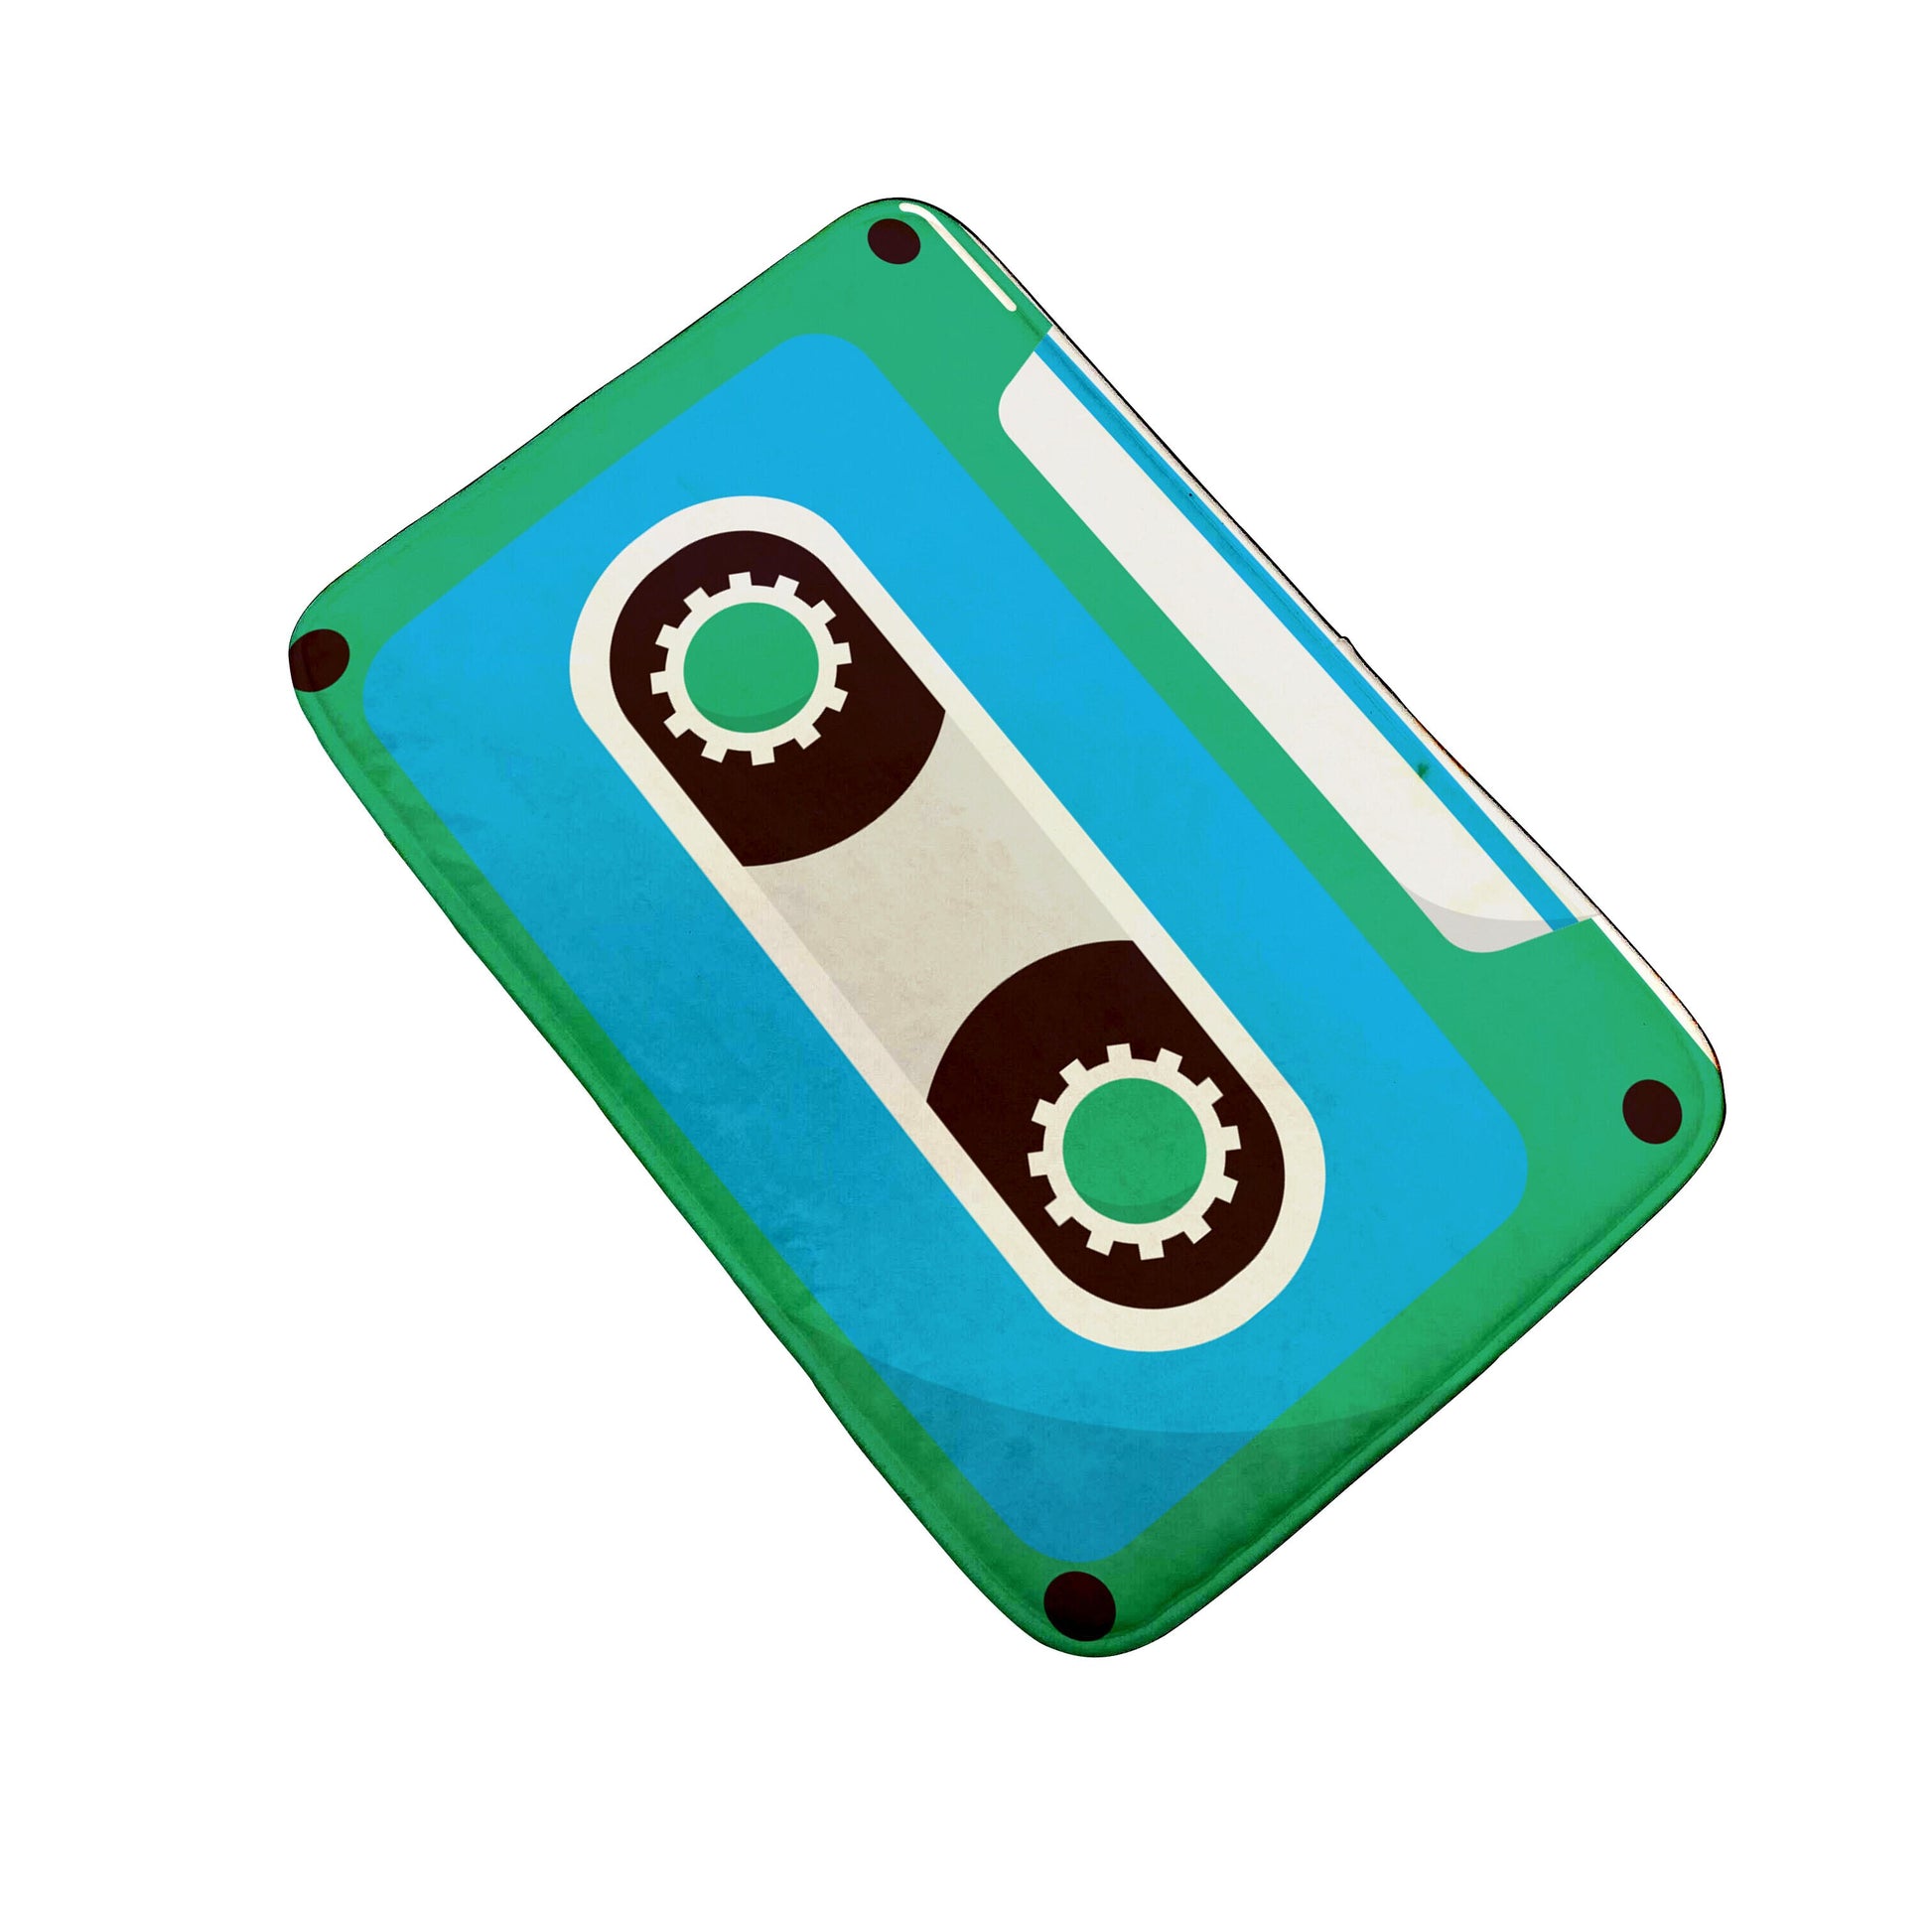 TEEK - A Bunch of Cassette Tape Rugs HOME DECOR theteekdotcom 4 15.75x23.62in 20-25 days